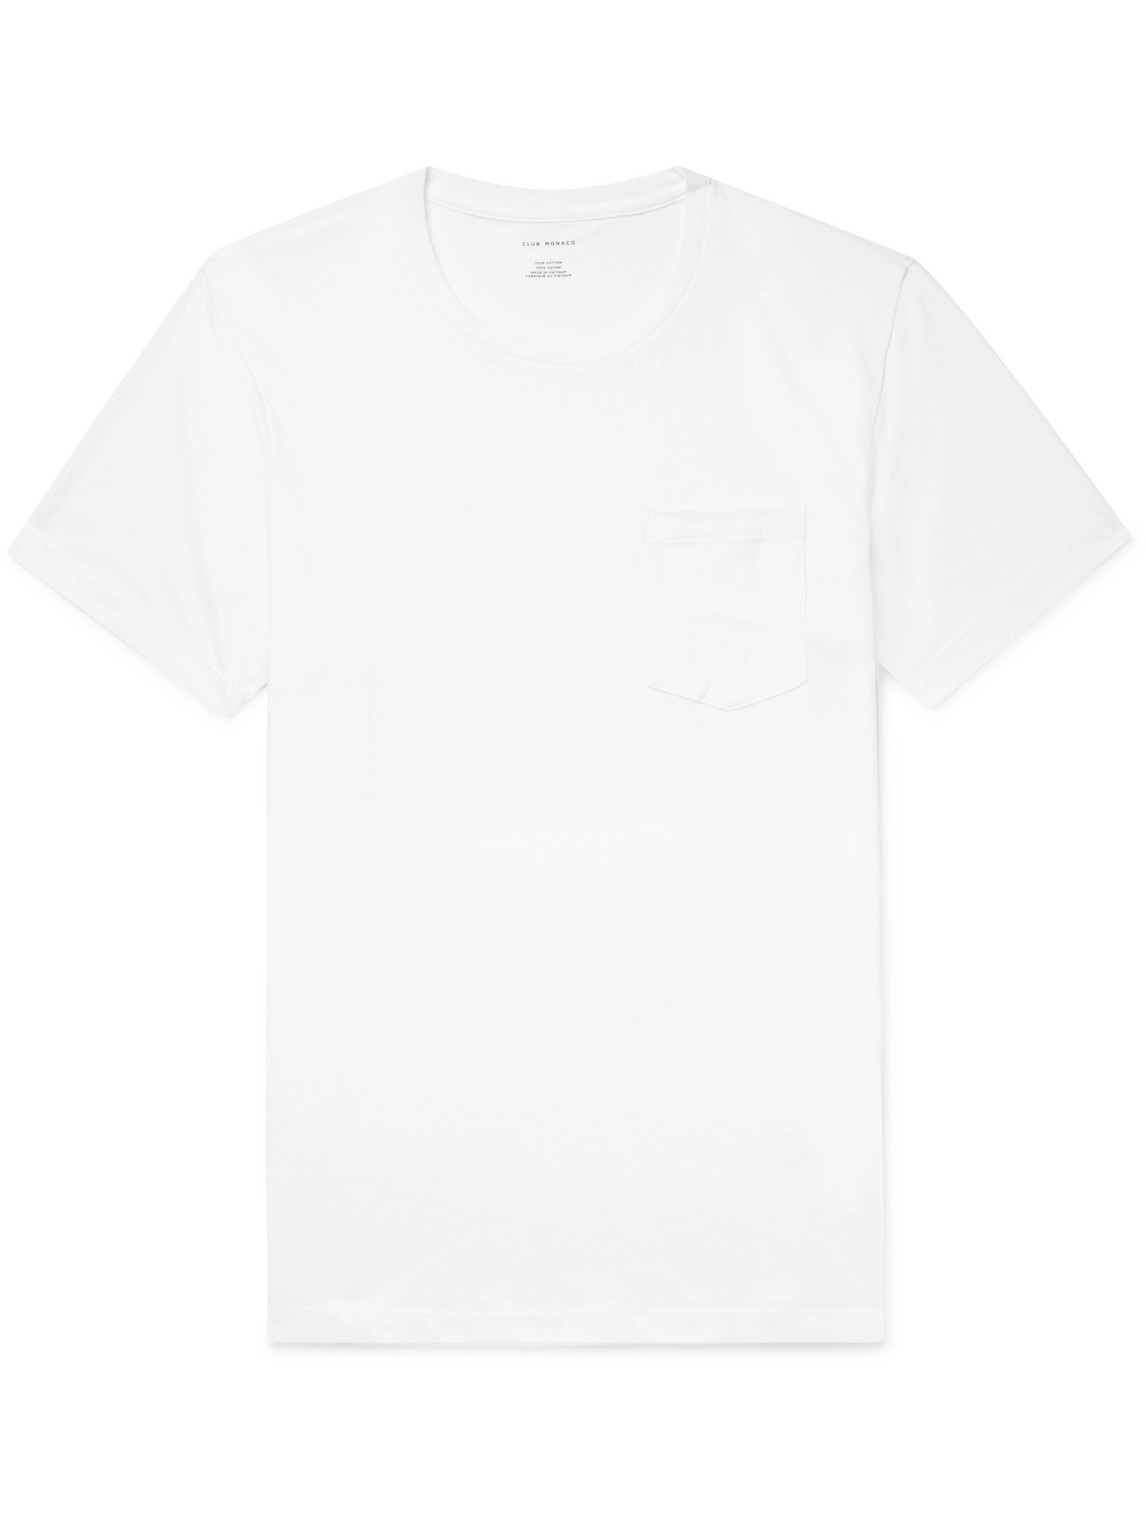 Club Monaco - Williams Cotton-Jersey T-Shirt - Men - White - L von Club Monaco